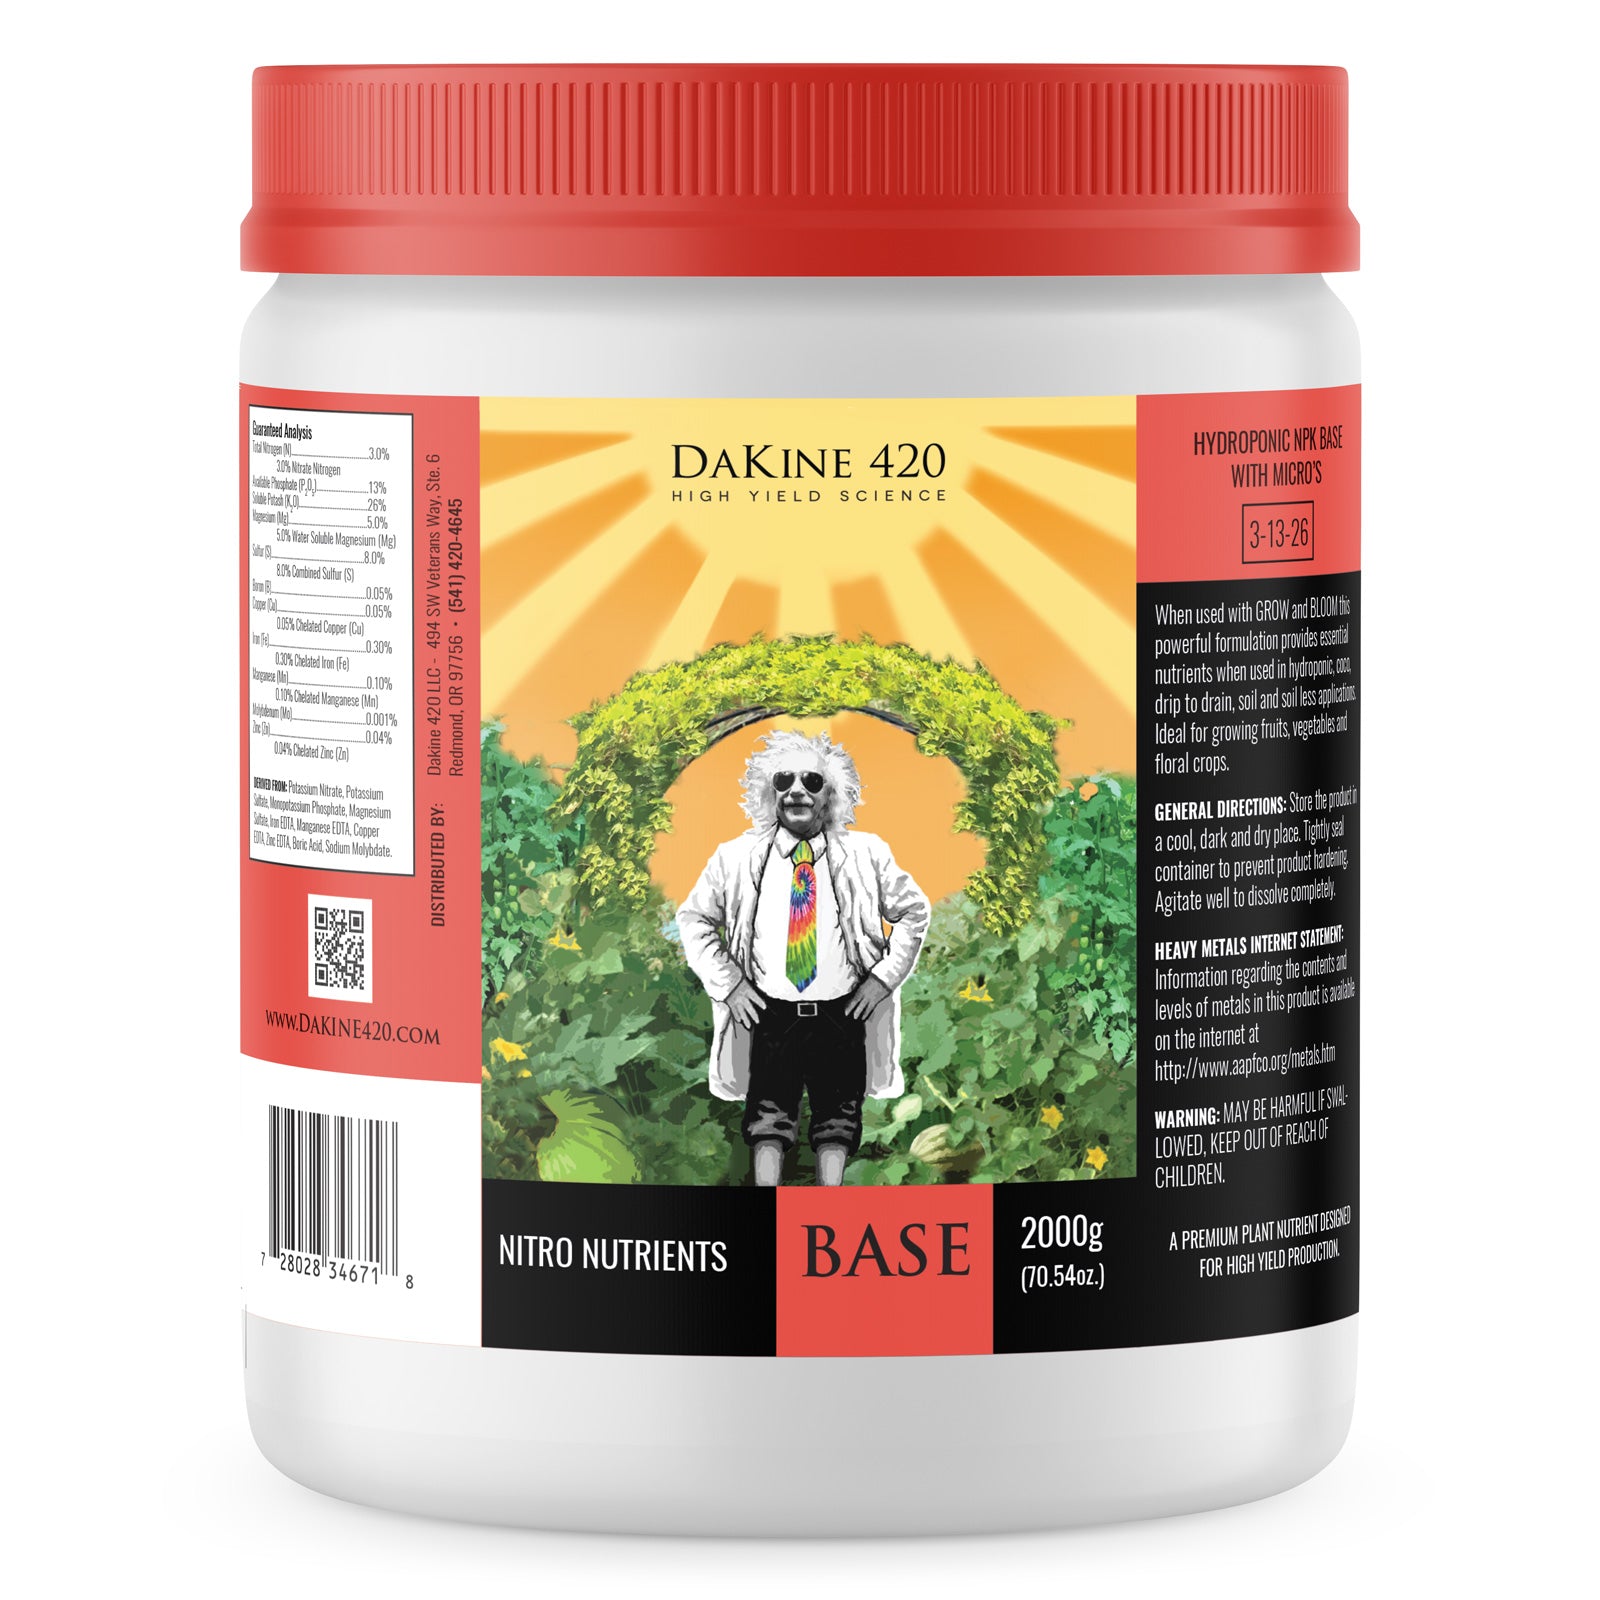 Nitro Nutrients BASE–carefully balanced NPK, plus trace minerals to meet all your cannabis plants’ needs. Nitro Nutrients BASE provides the ideal ratios for maximum vegetative growth.